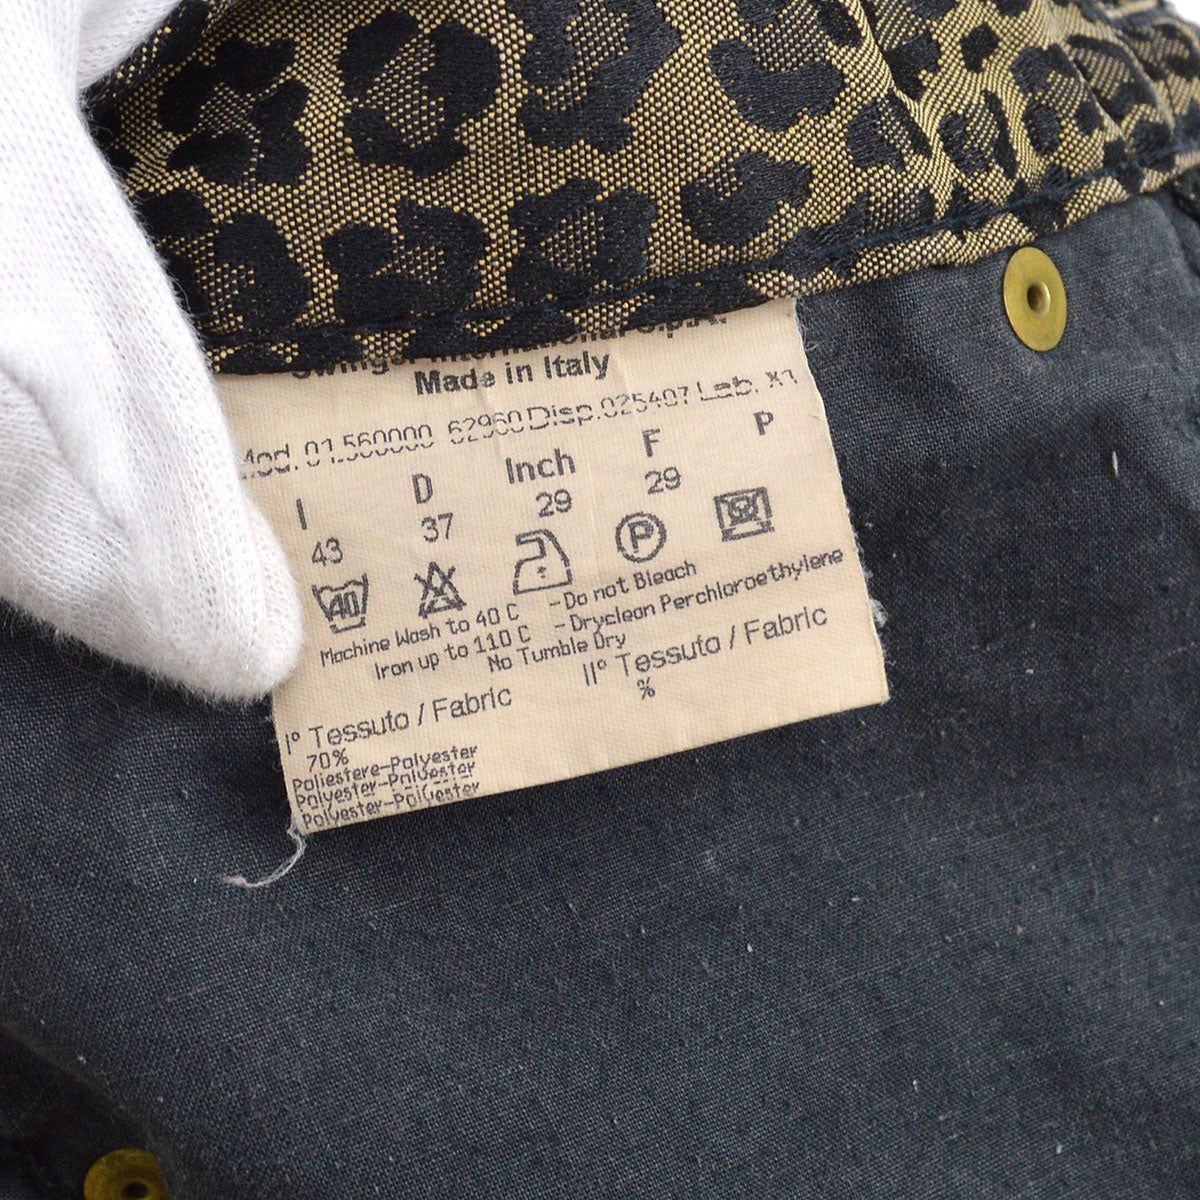 FENDI 80s leopard-print tapered trousers 